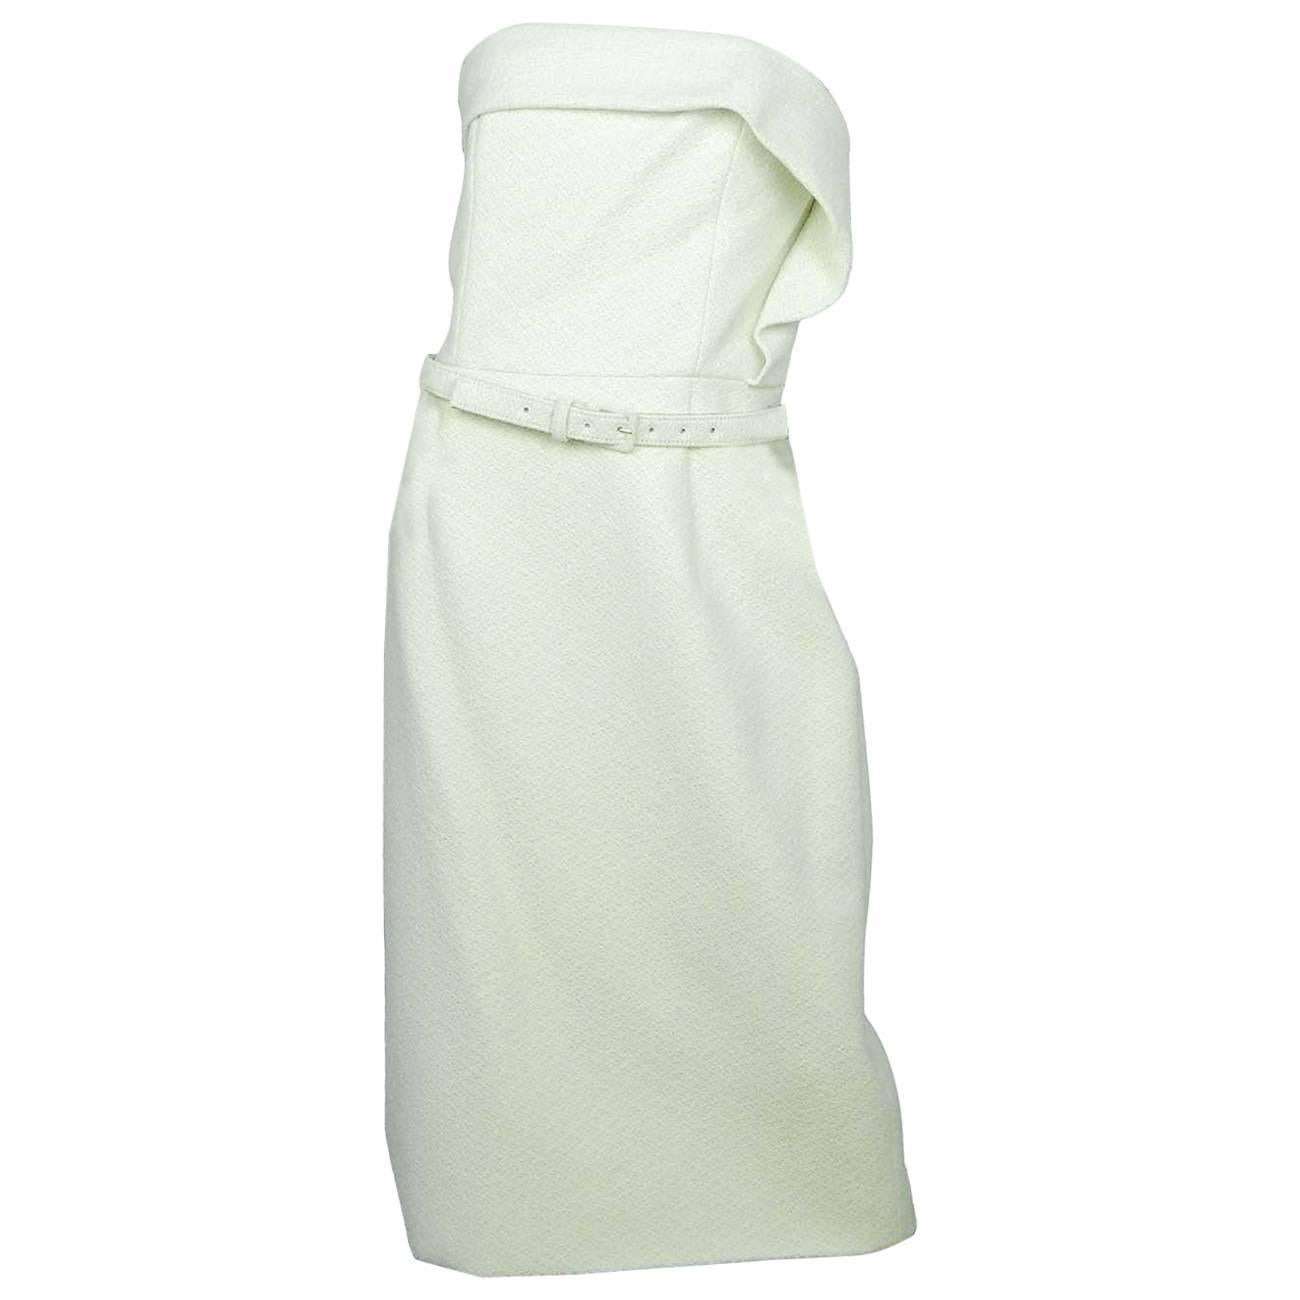 Christian Siriano White Strapless Dress Sz 12